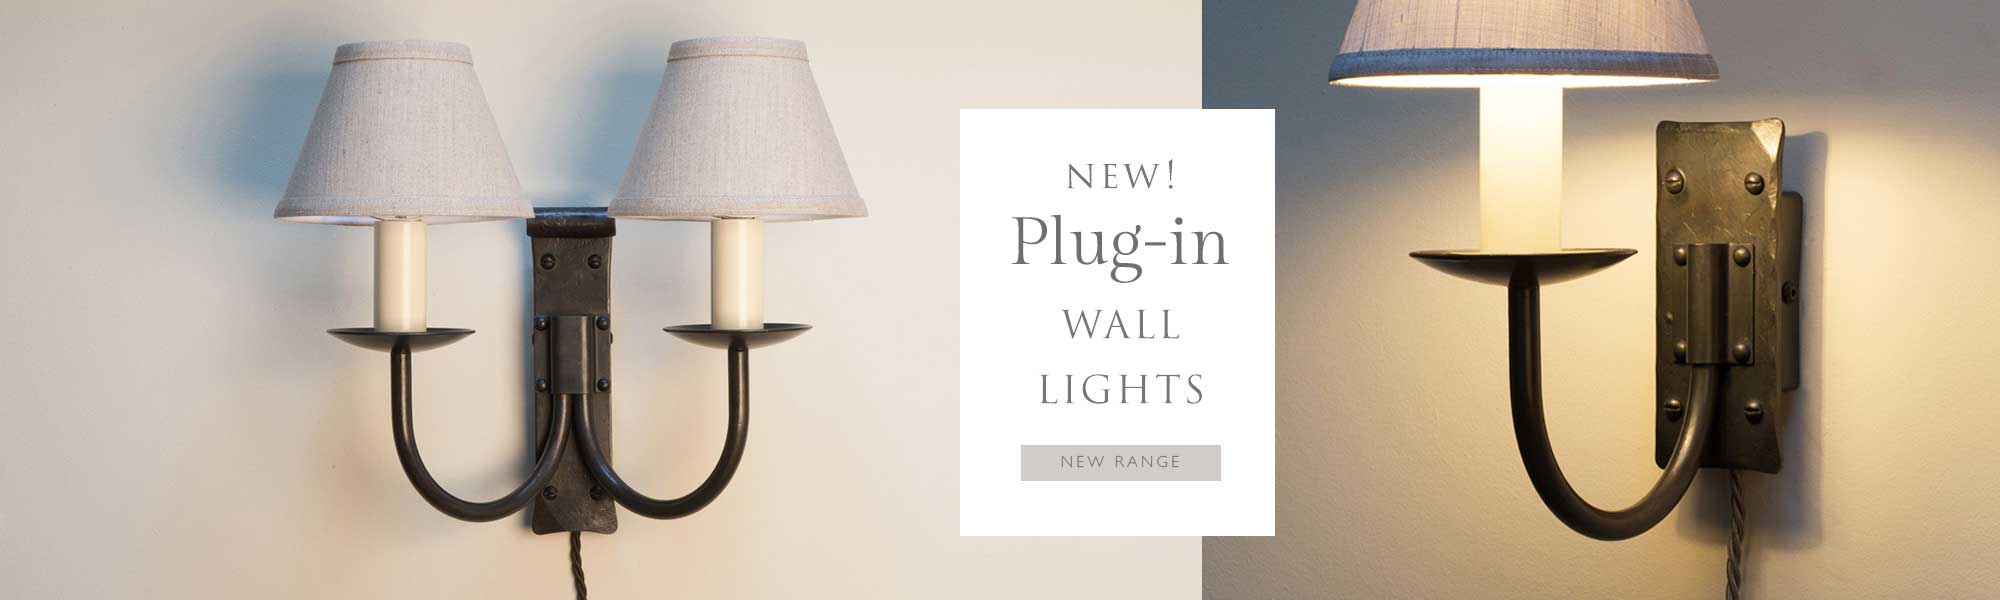 Plug-in Wall Lighting from Nigel Tyas Ironwork